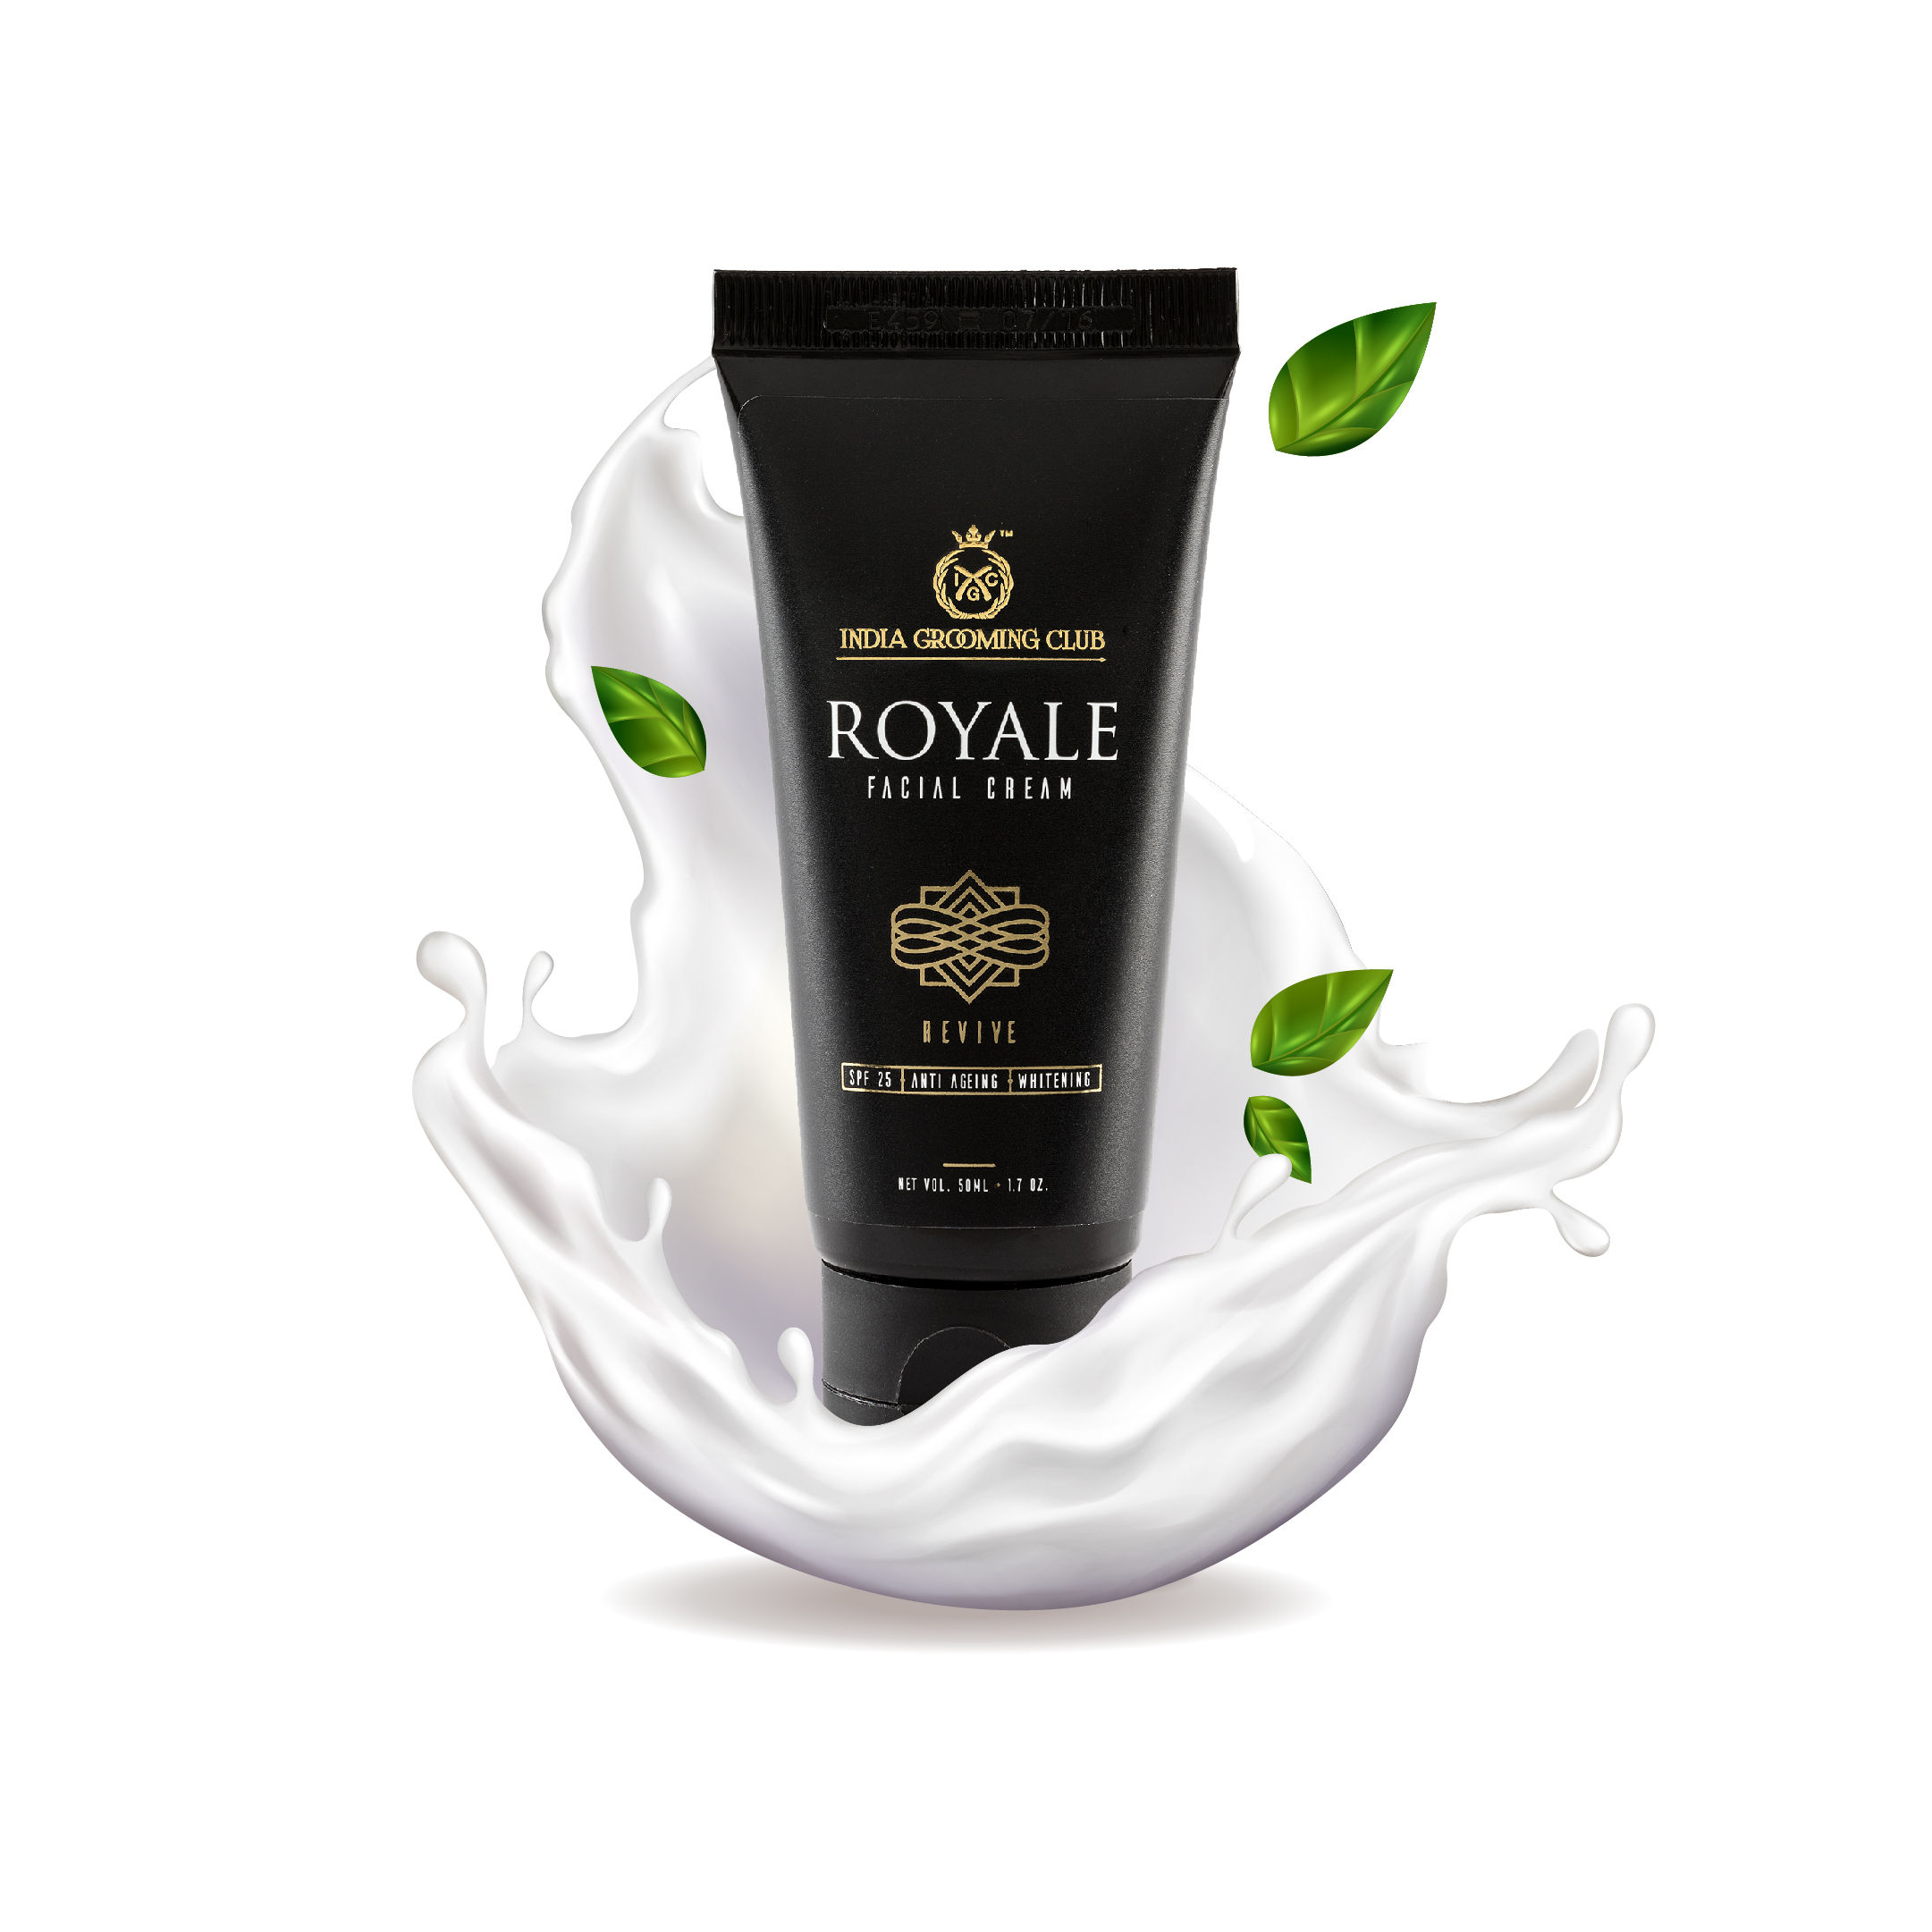 India Grooming Club Royale Facial Cream